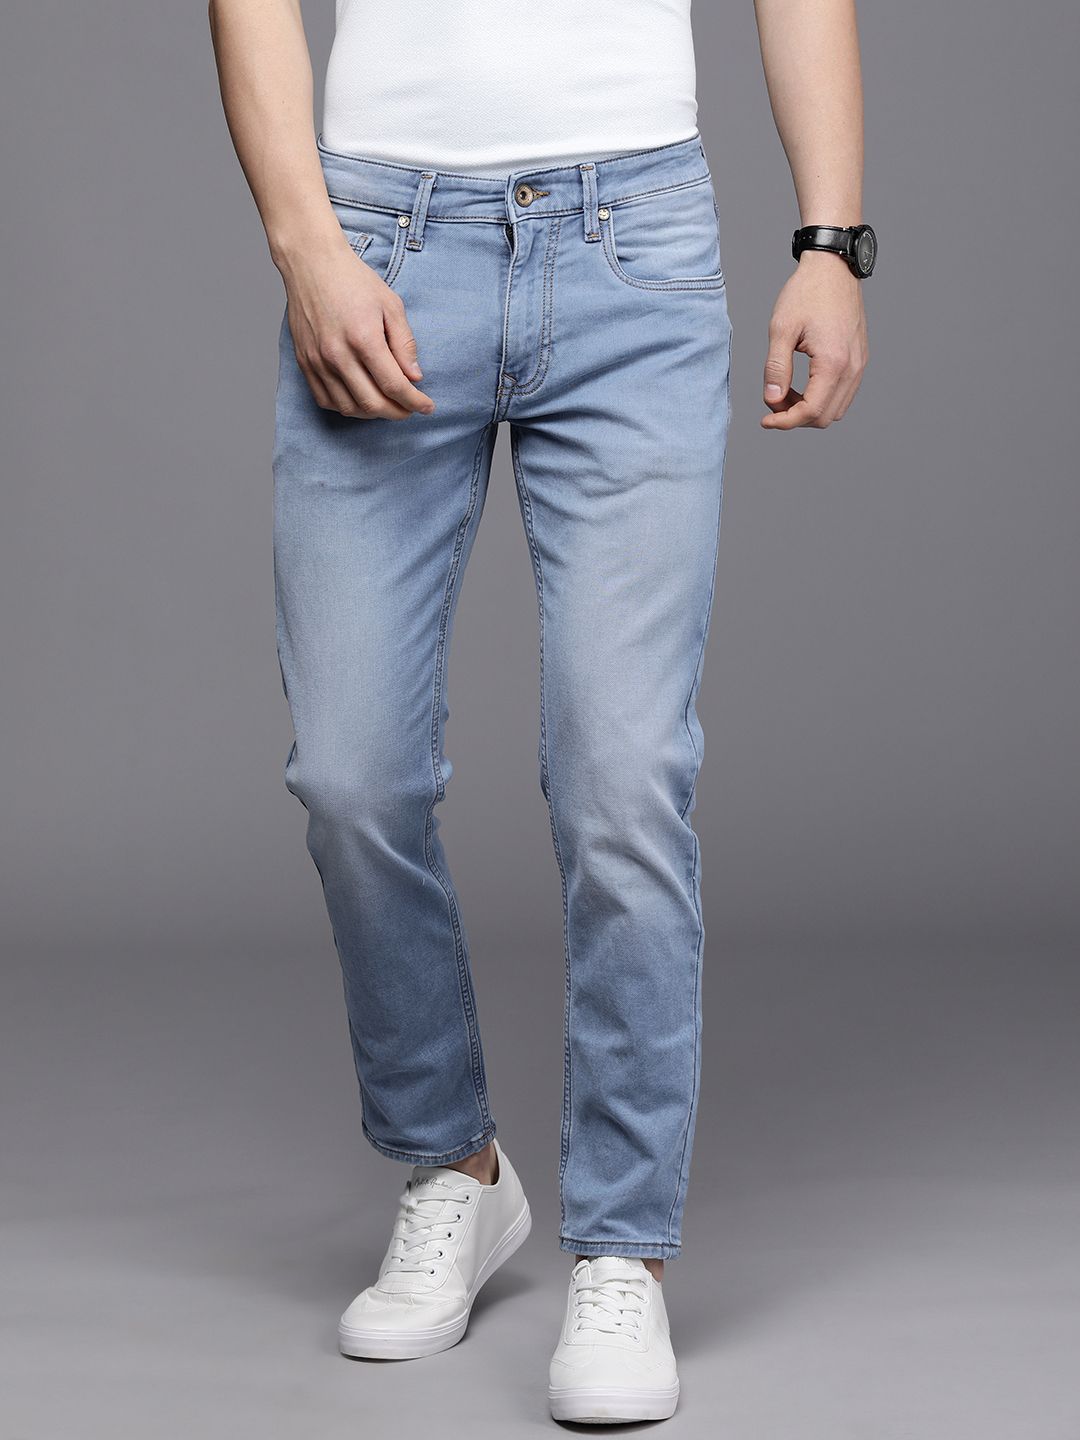 Buy Louis Philippe Jeans Men Blue Slim Fit Mid Rise Light Fade